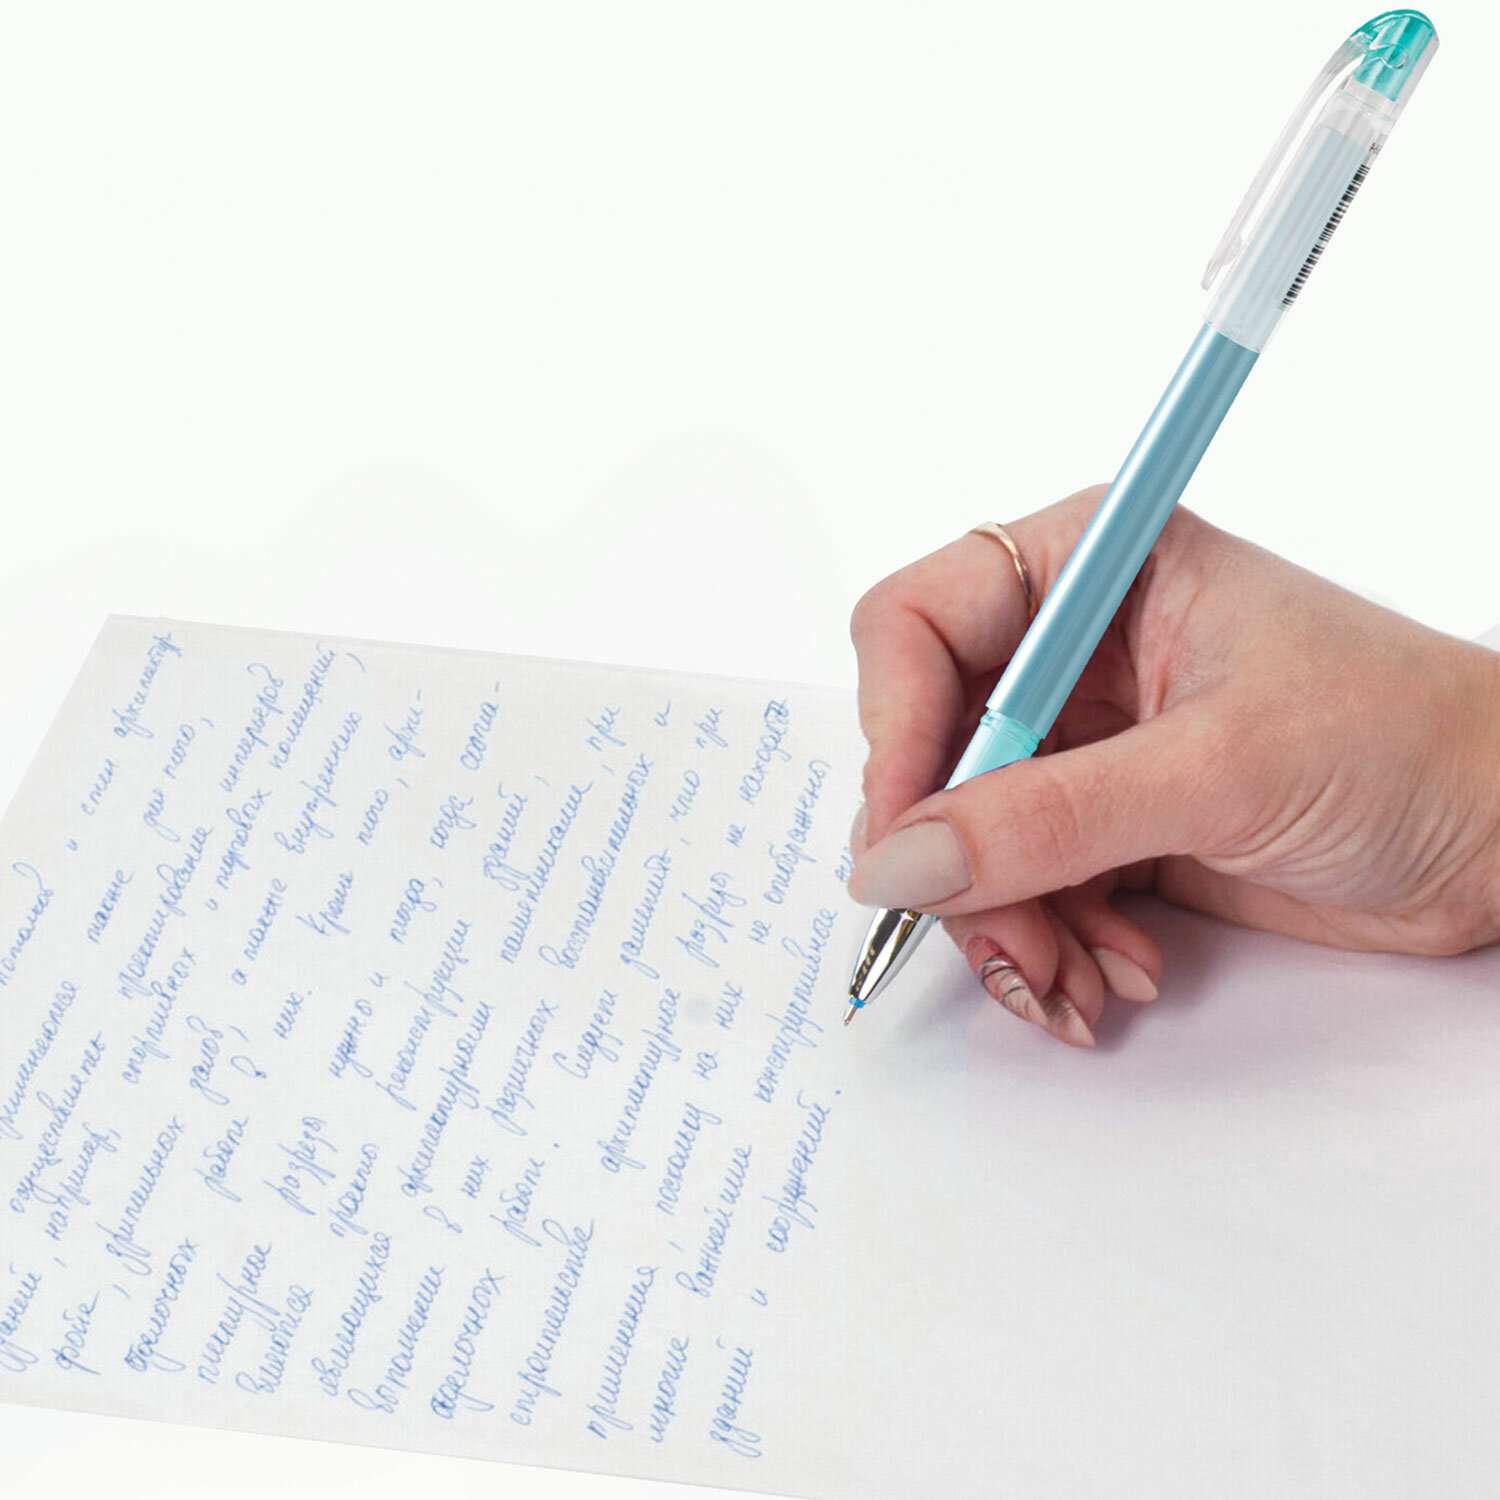 Ручки гелевые Staff пиши-стирай College набор 2 шт синие и 4 стержня - фото 11